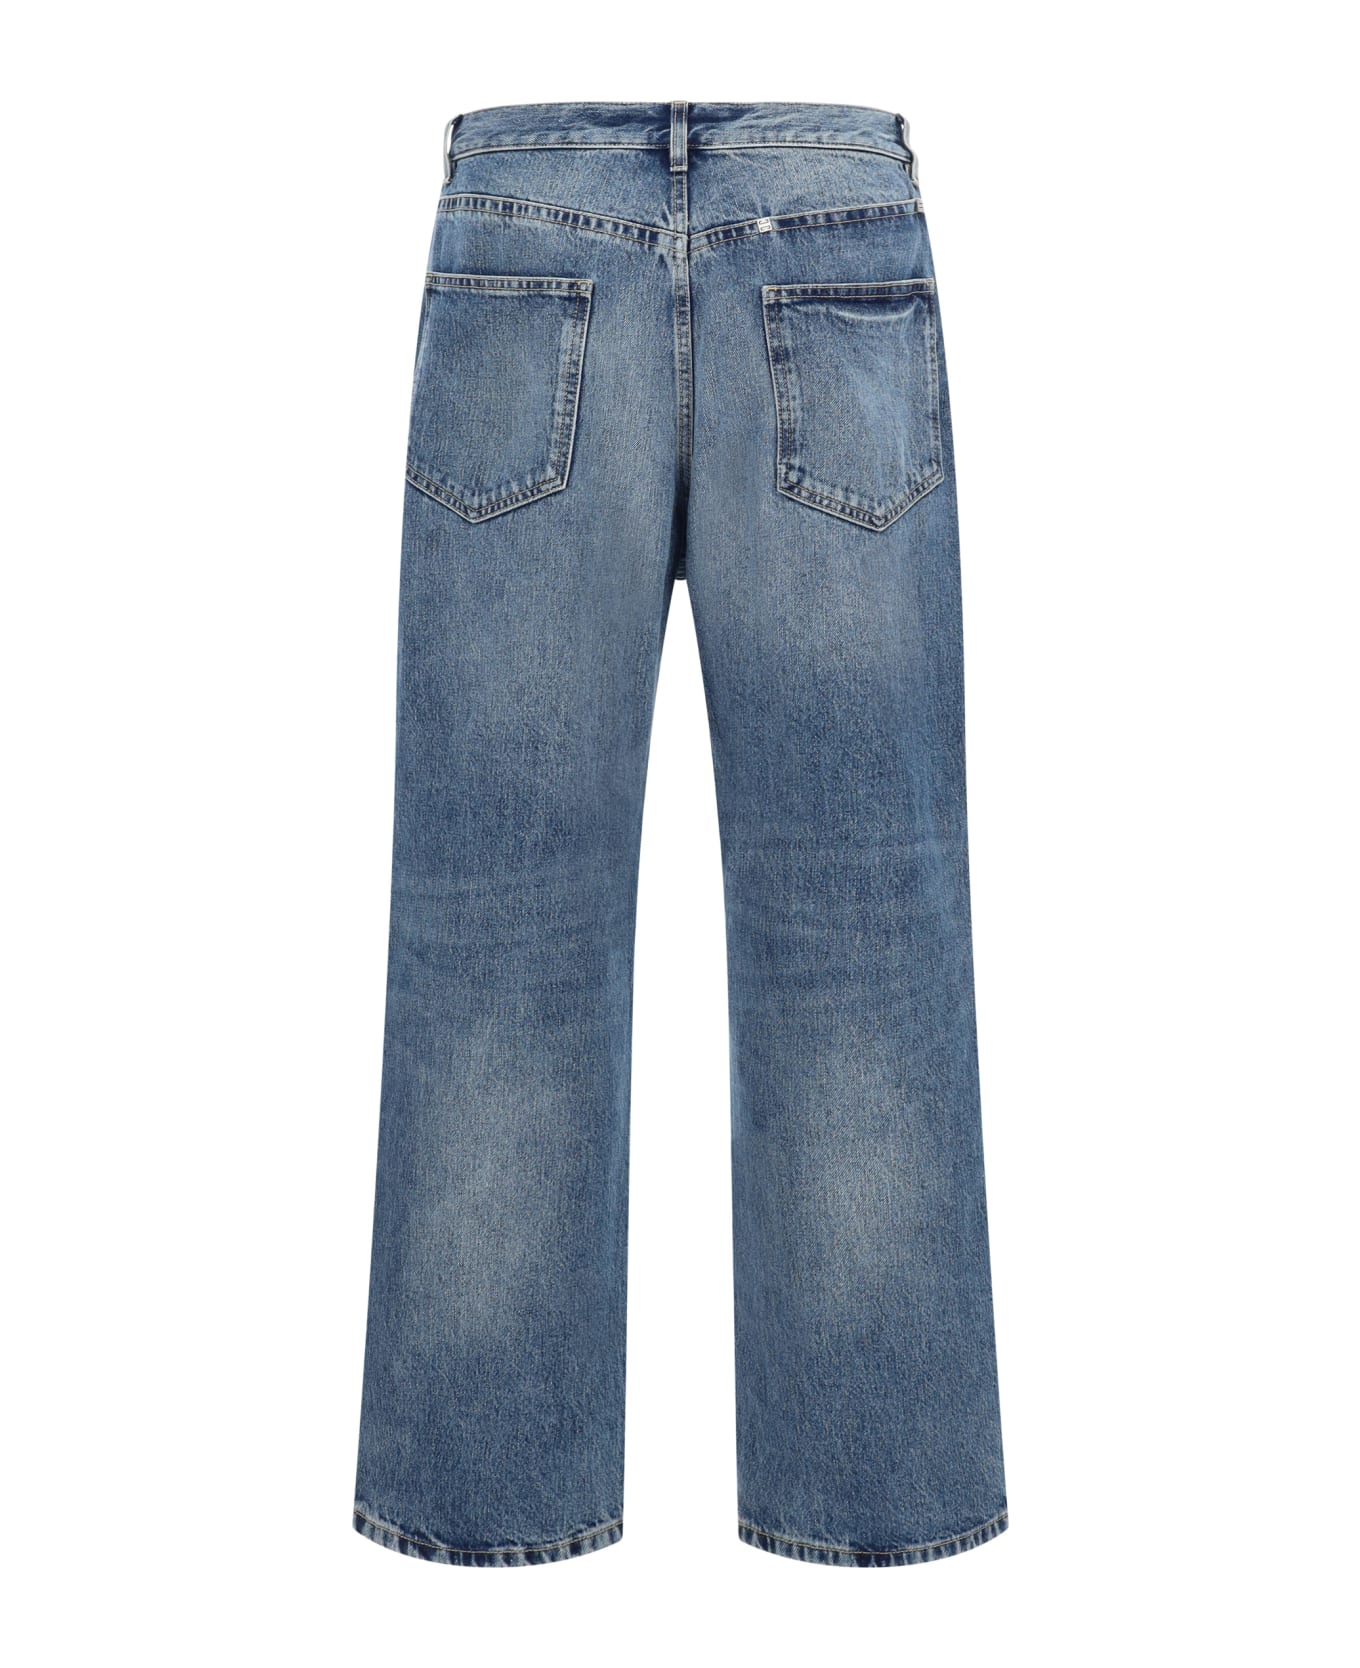 Givenchy Jeans - Indigo blu